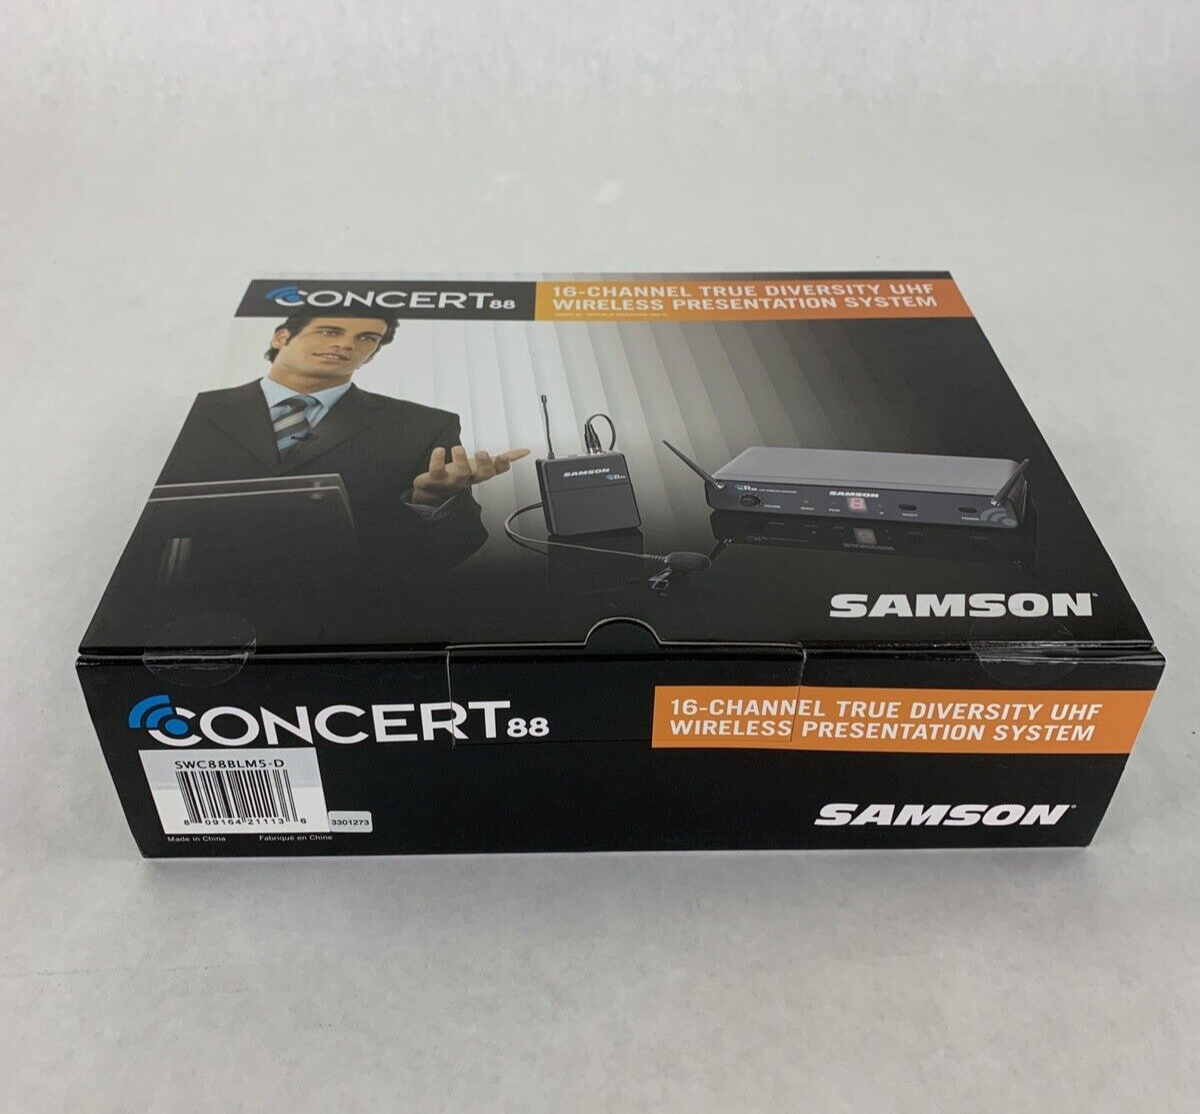 New Samson Concert 88 16-Channel True Diversity UHF Wireless Headset System